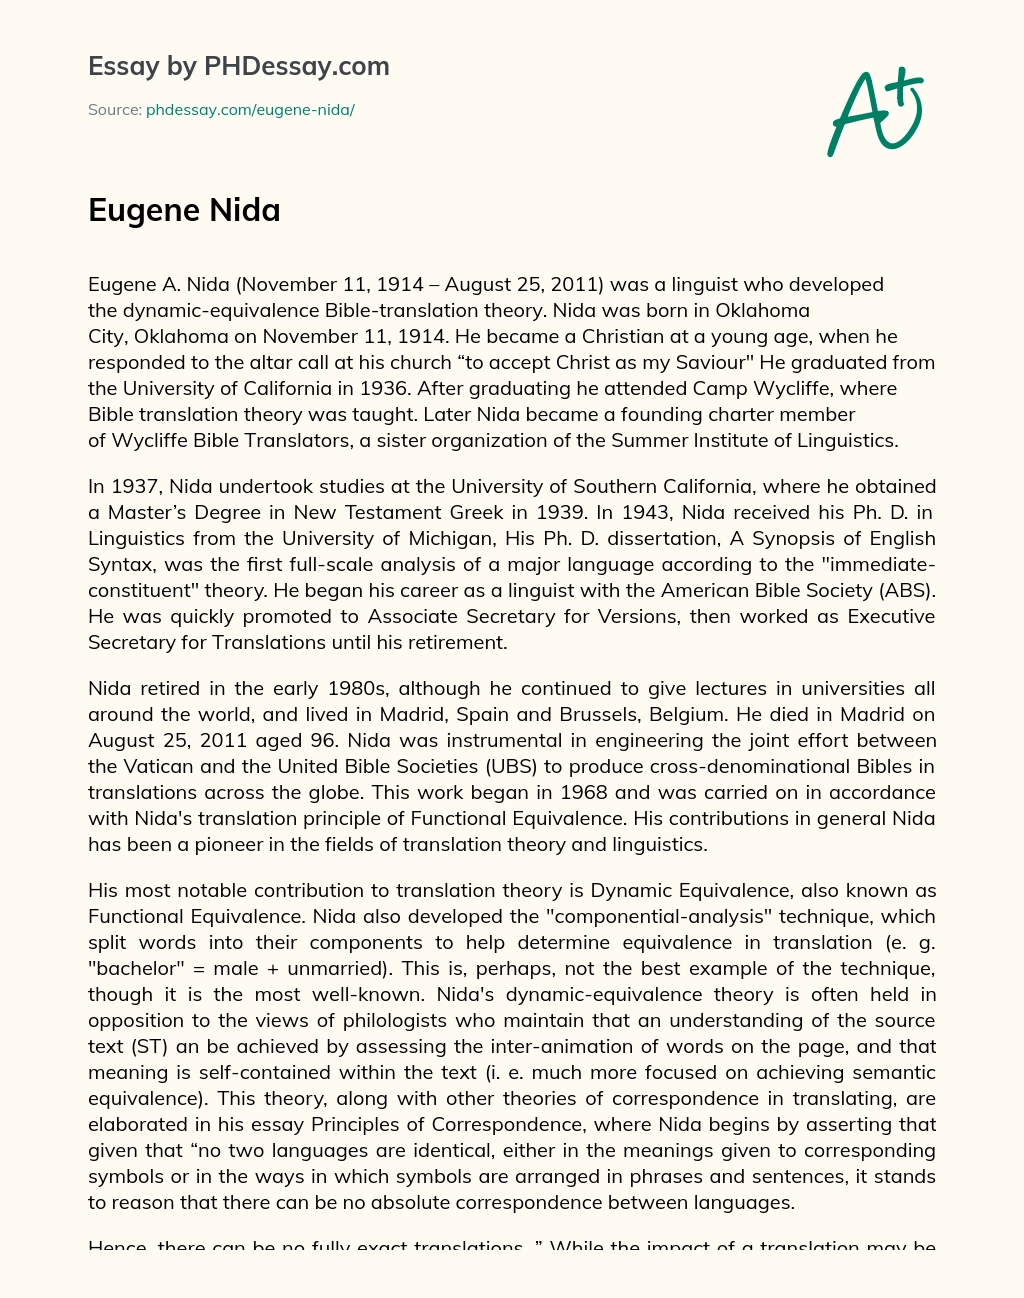 Eugene A. Nida: Pioneer of Dynamic-Equivalence Bible Translation Theory and Linguistics essay